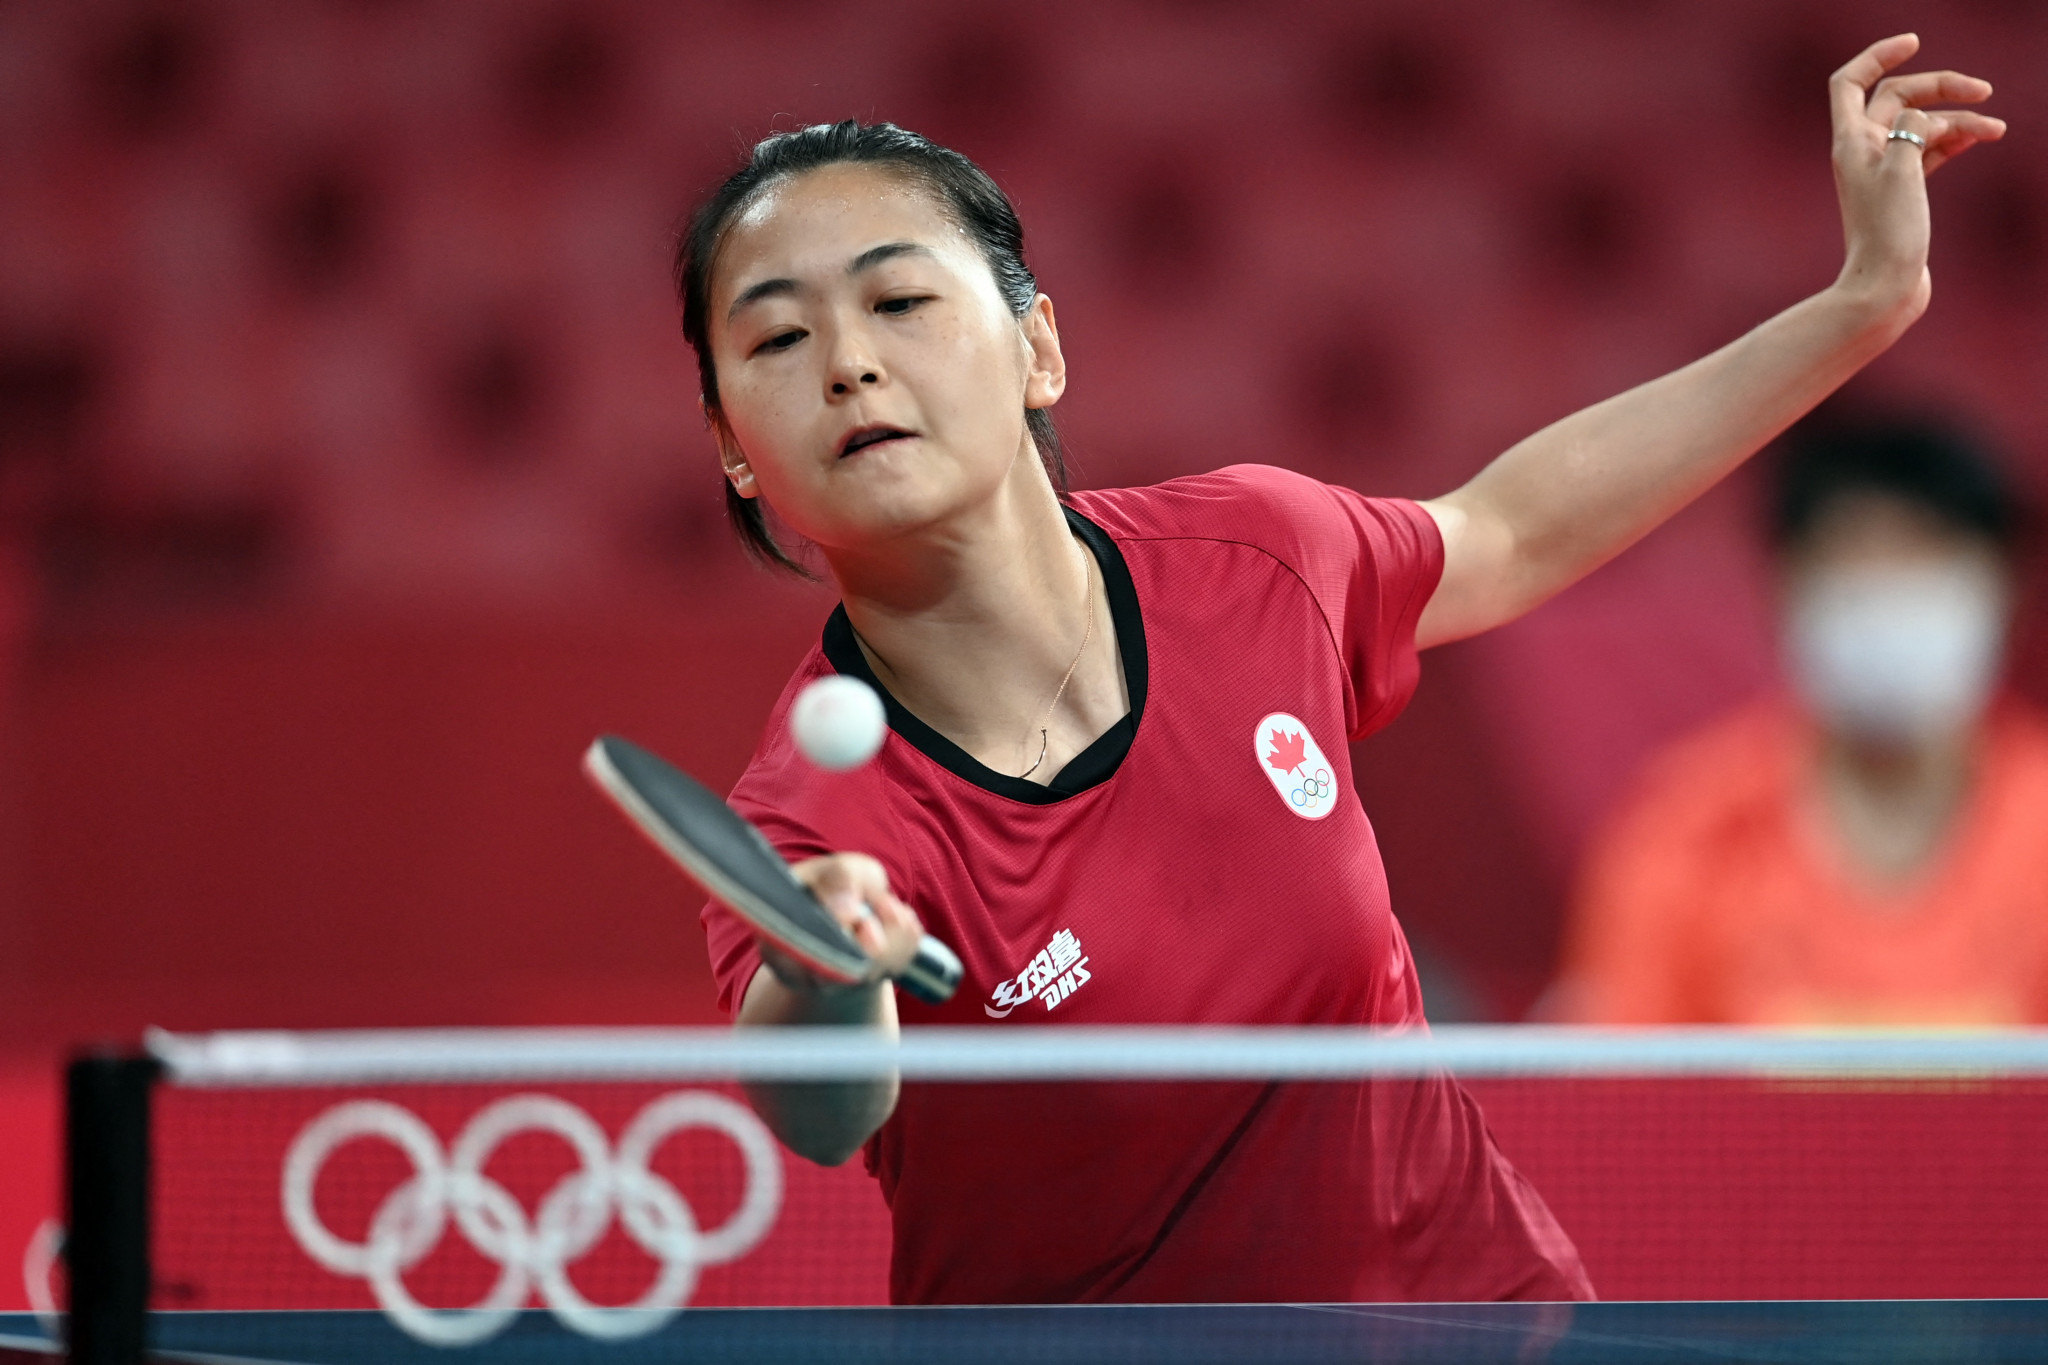 GOOD EFFORT AT TOKYO OLYMPICS - Table Tennis Canada